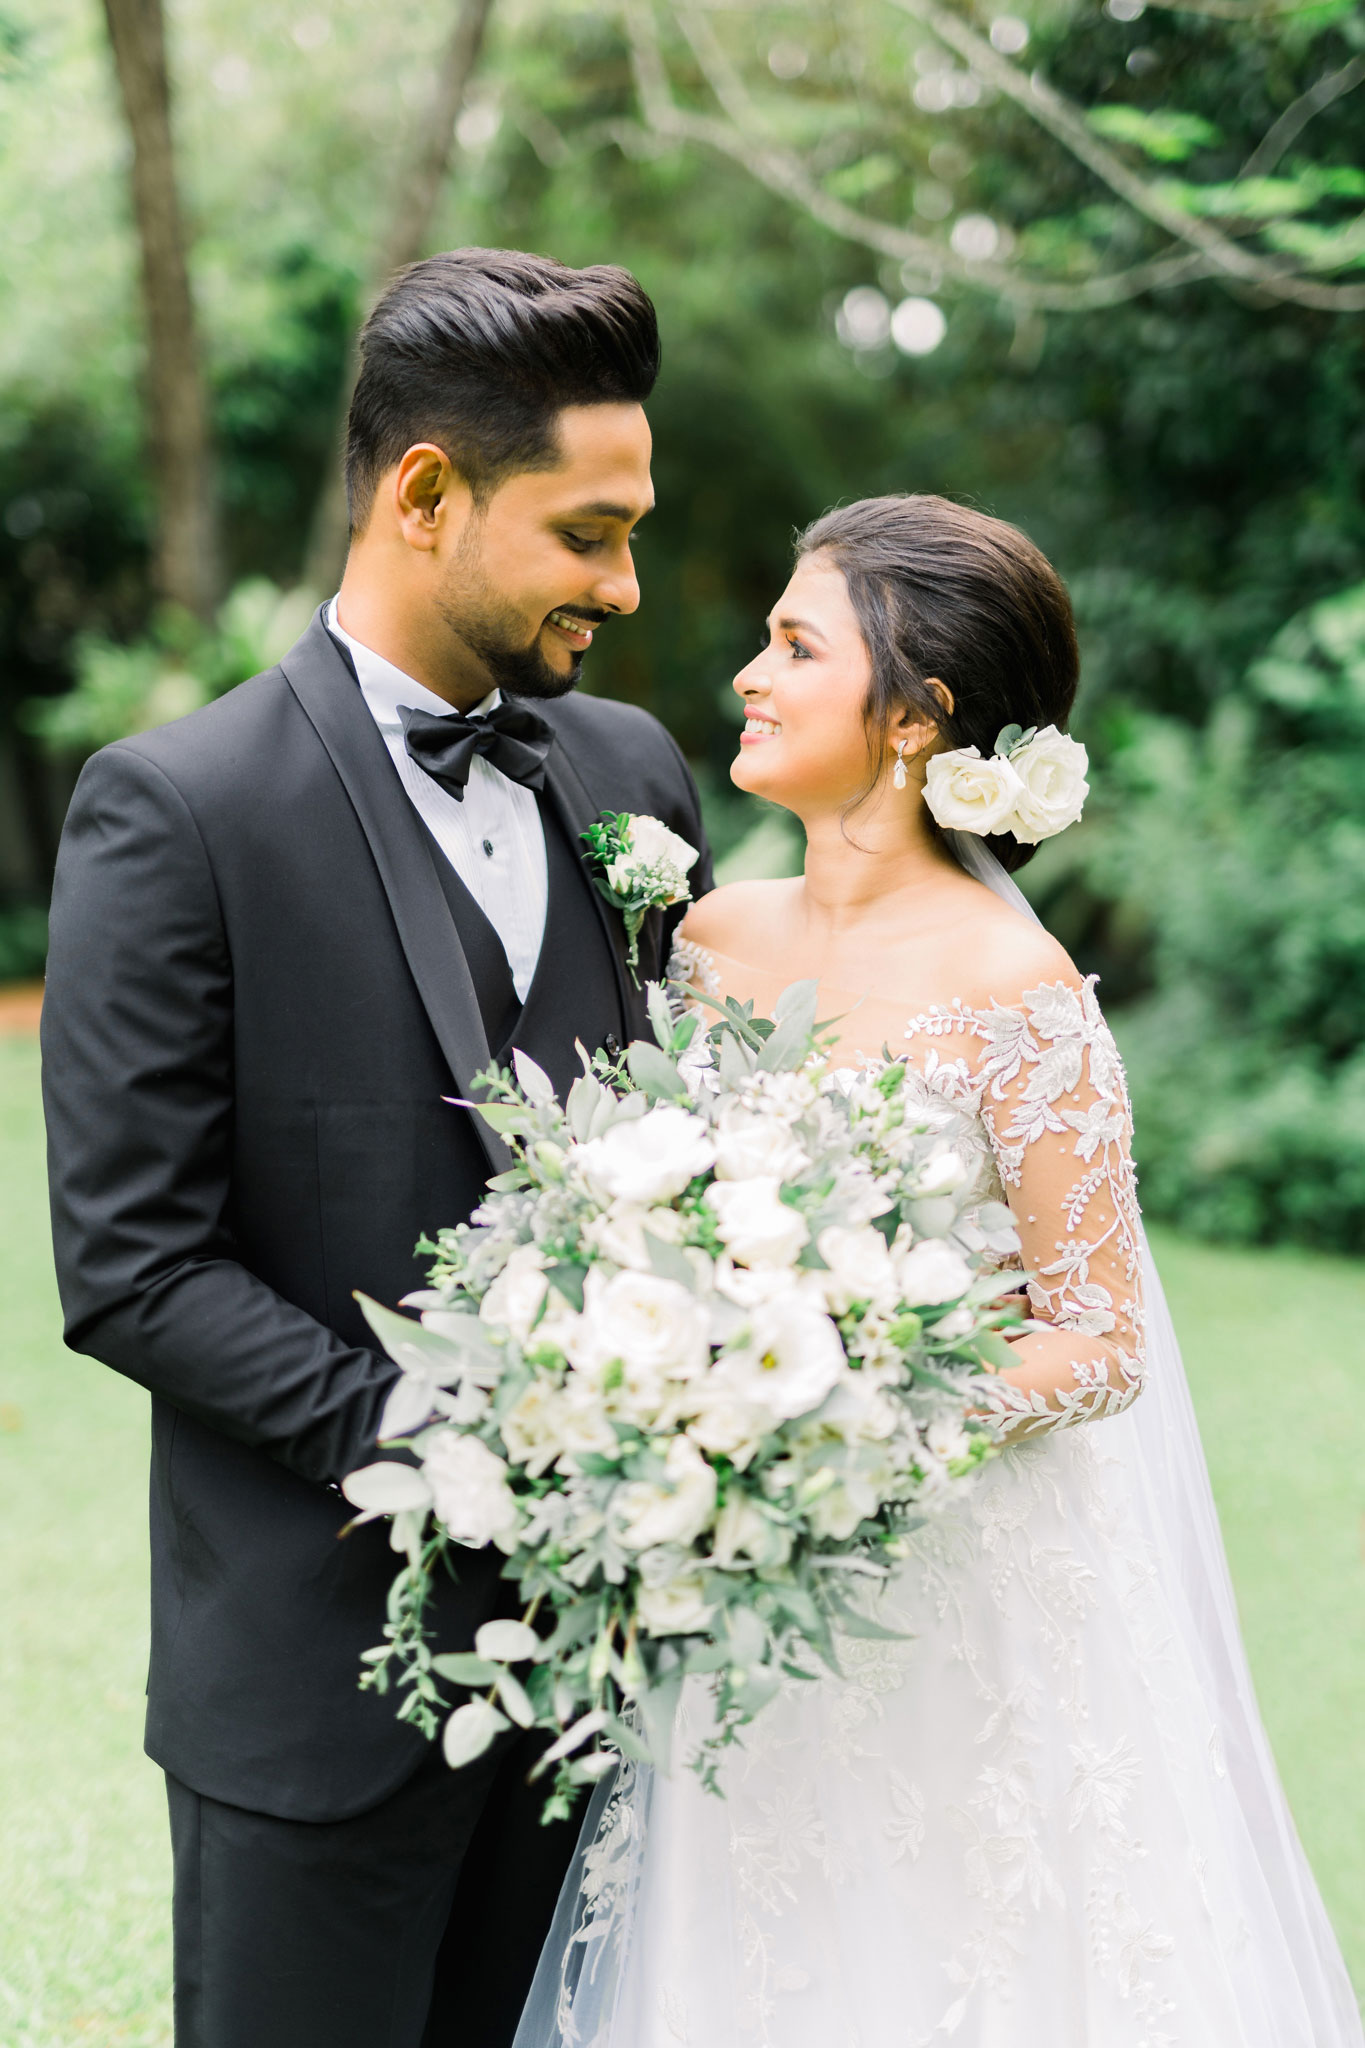 Hiruni & Akila - Prabath Kanishka Wedding Photography